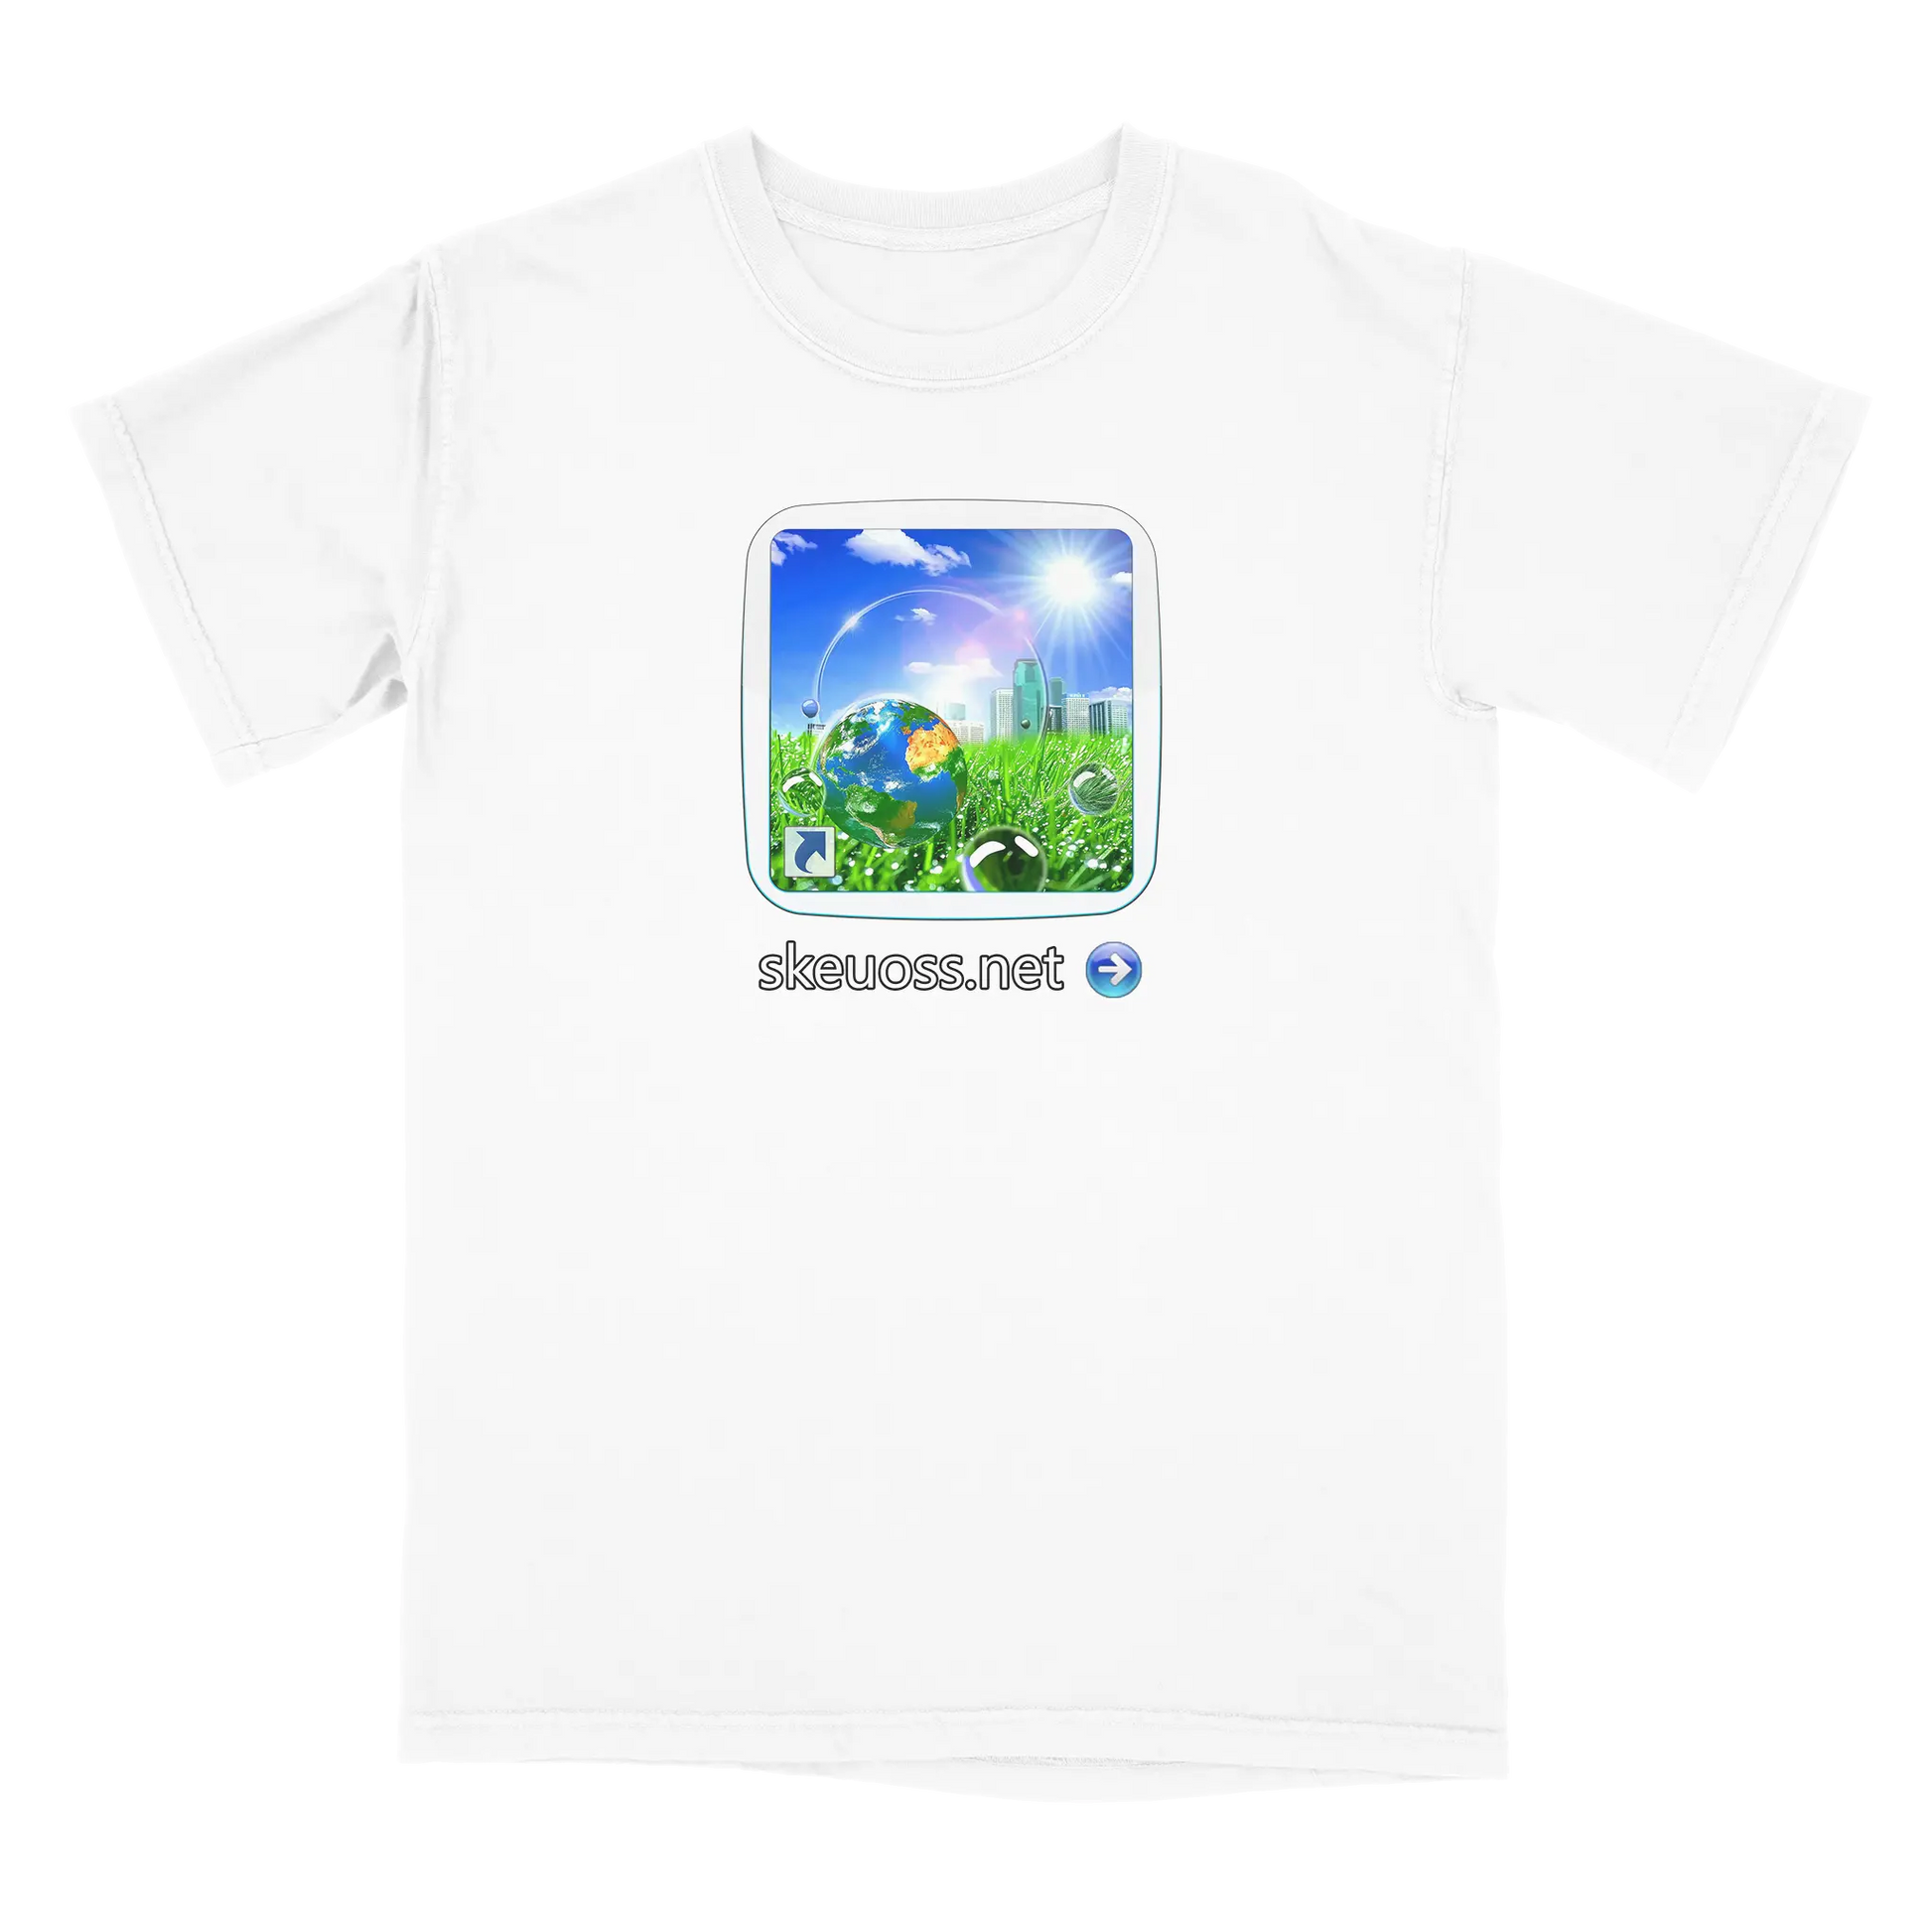 Frutiger Aero T-shirt - User Login Collection - User 249